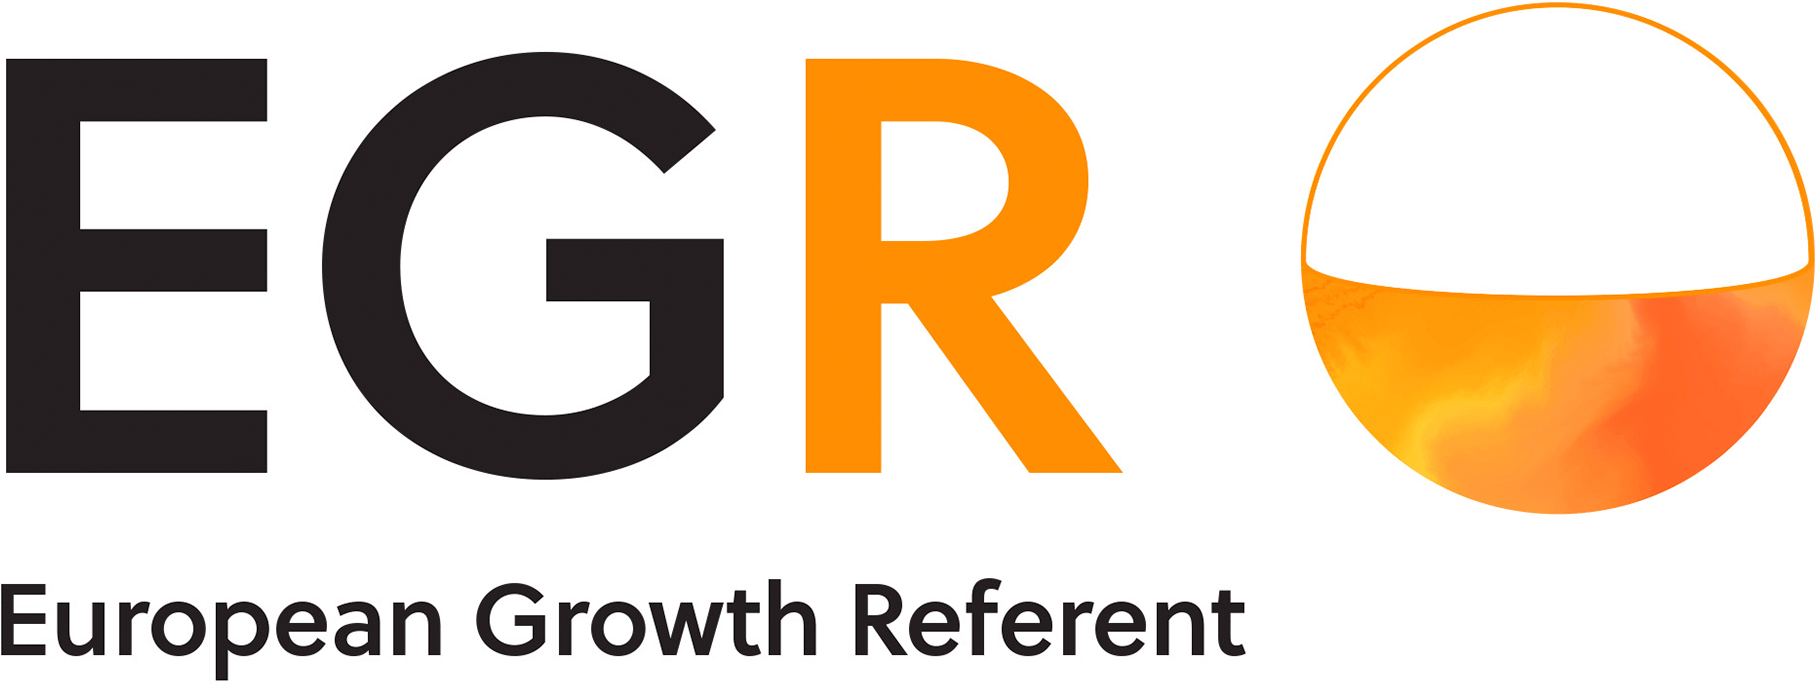 European Growth Referent